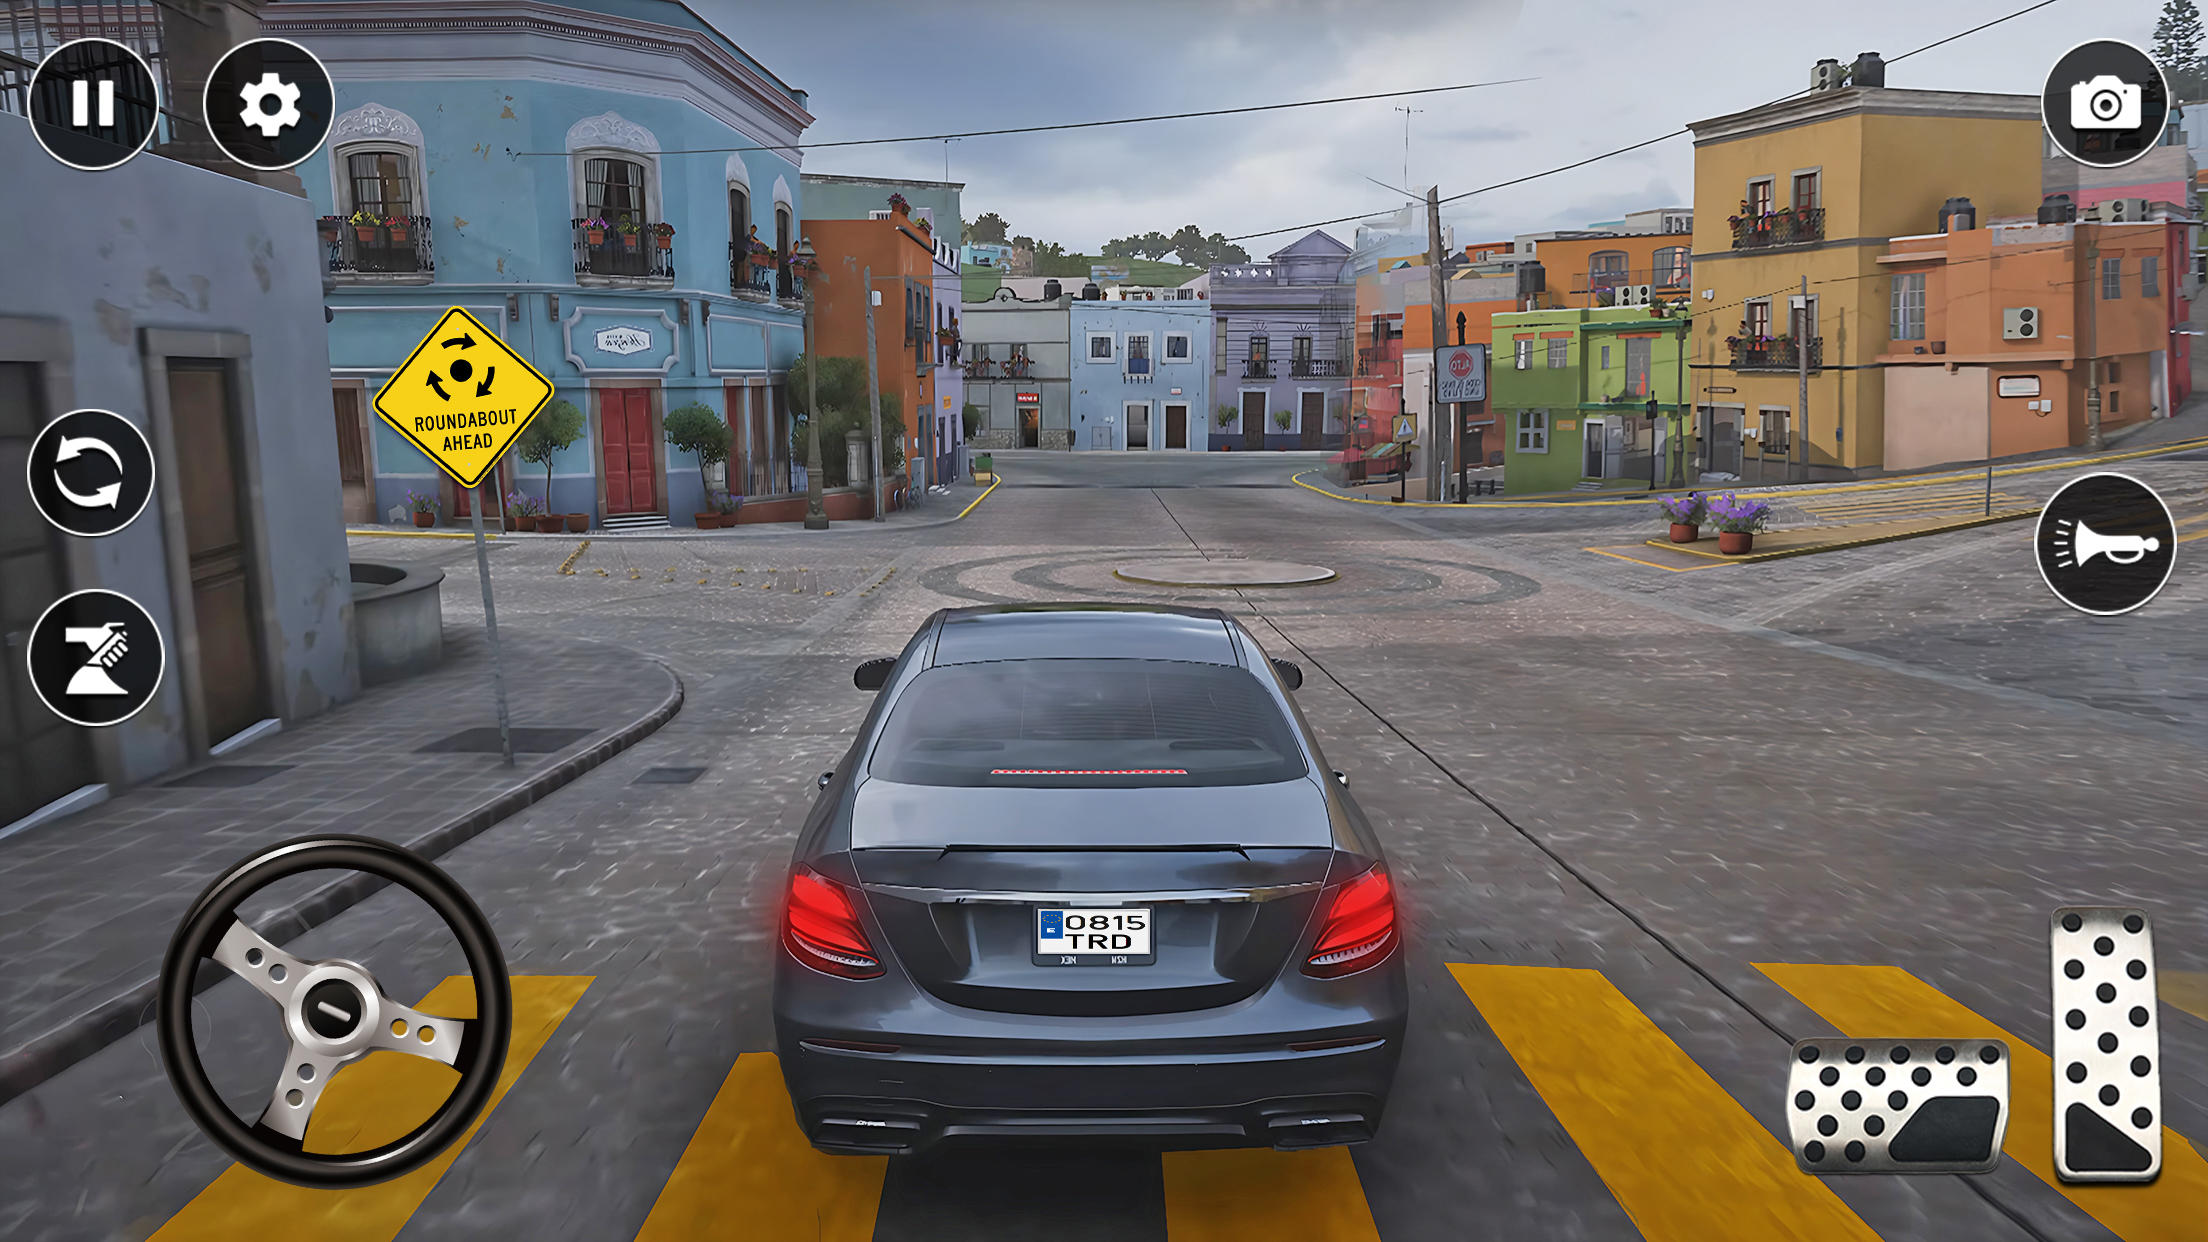 Screenshot 1 of ขับรถในเมือง: เกมรถ 3 มิติ 1.2